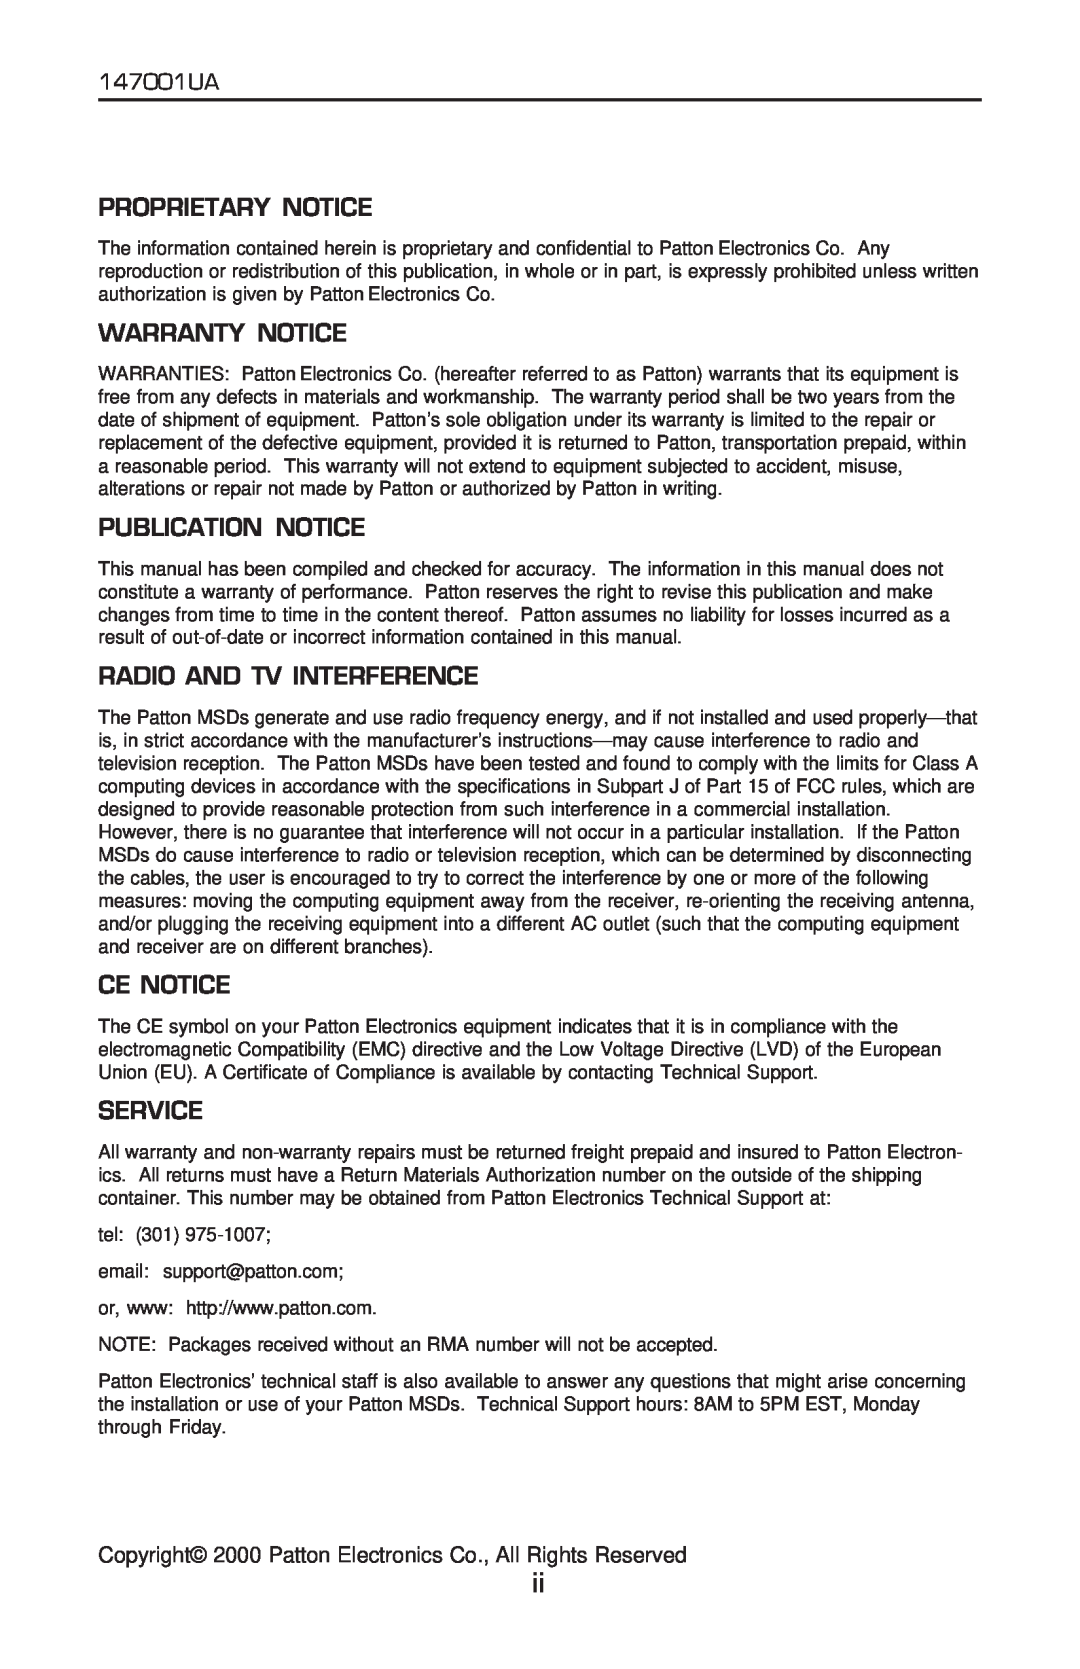 Patton electronic 2020P Proprietary Notice, Warranty Notice, Publication Notice, Radio And Tv Interference, Ce Notice 